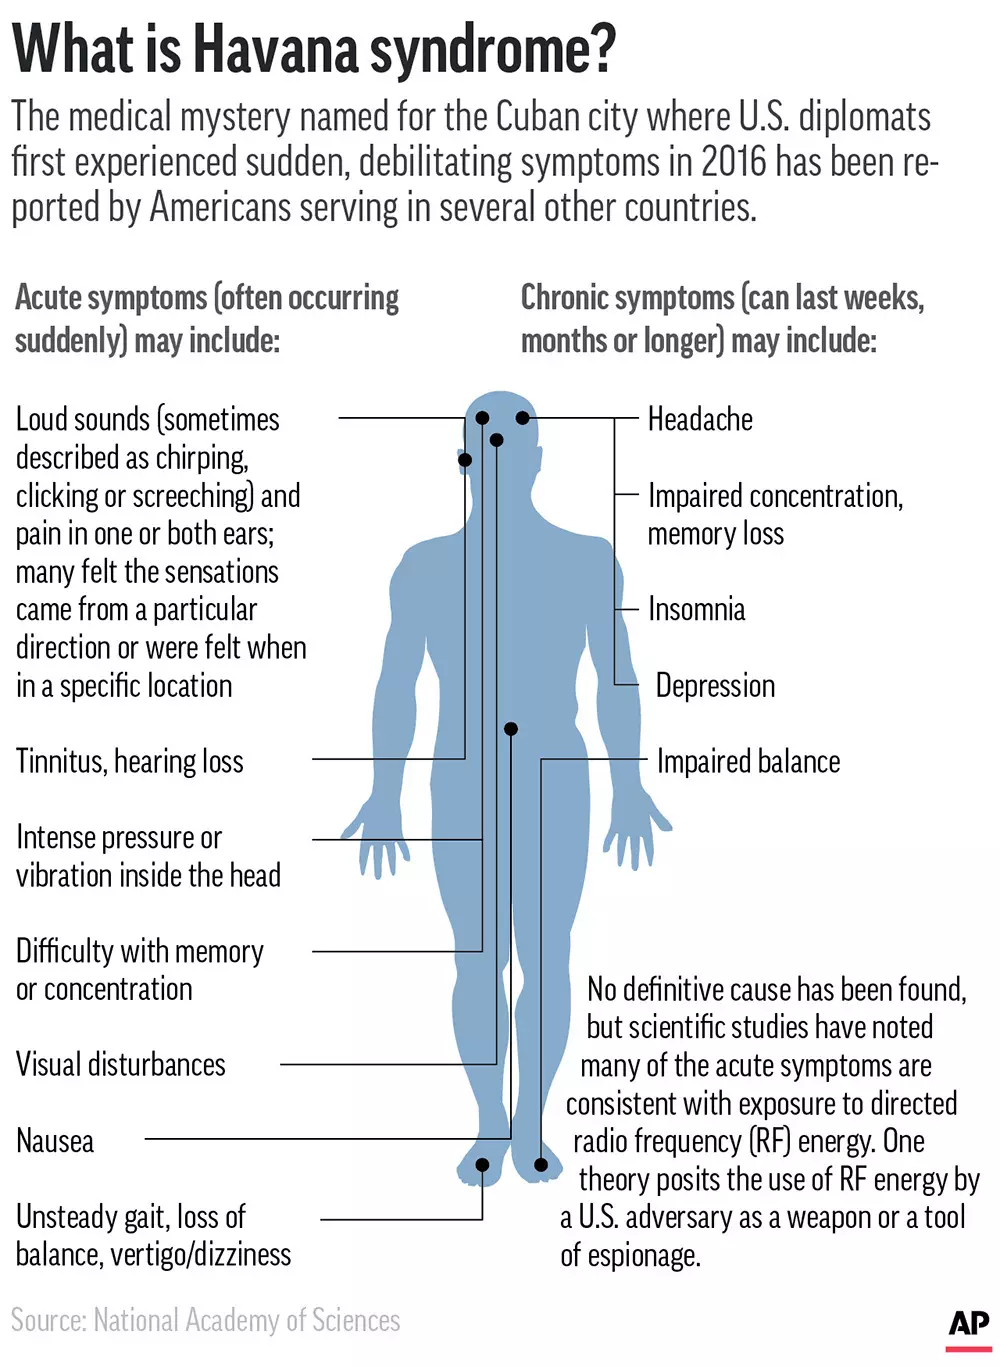 Havana syndrome symptoms. (